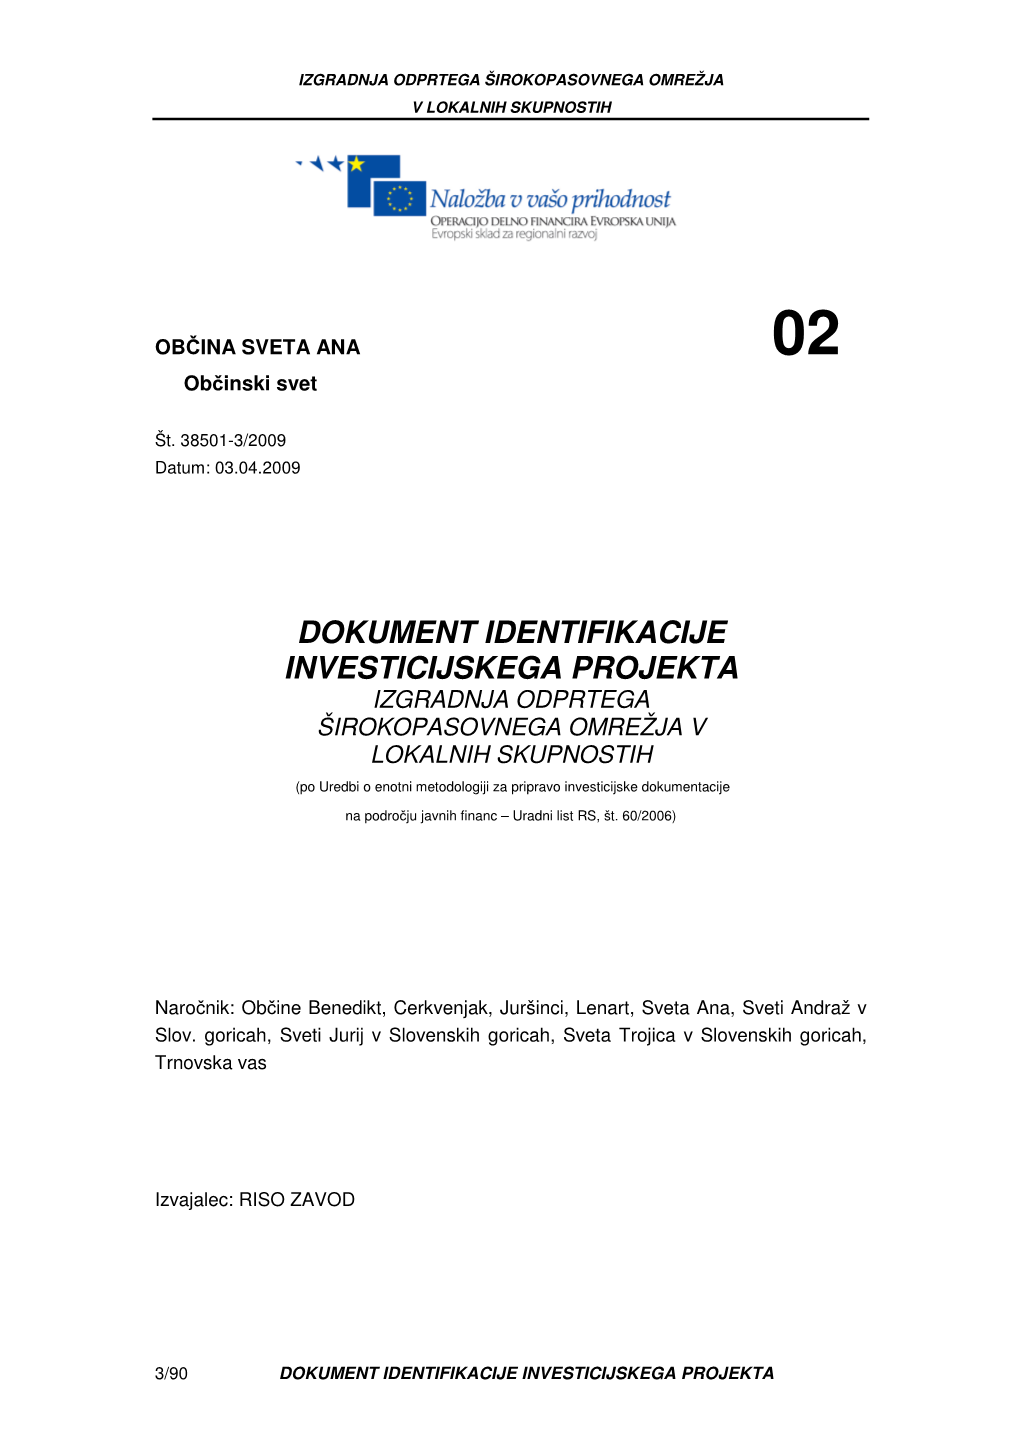 Dokument Identifikacije Investicijskega Projekta